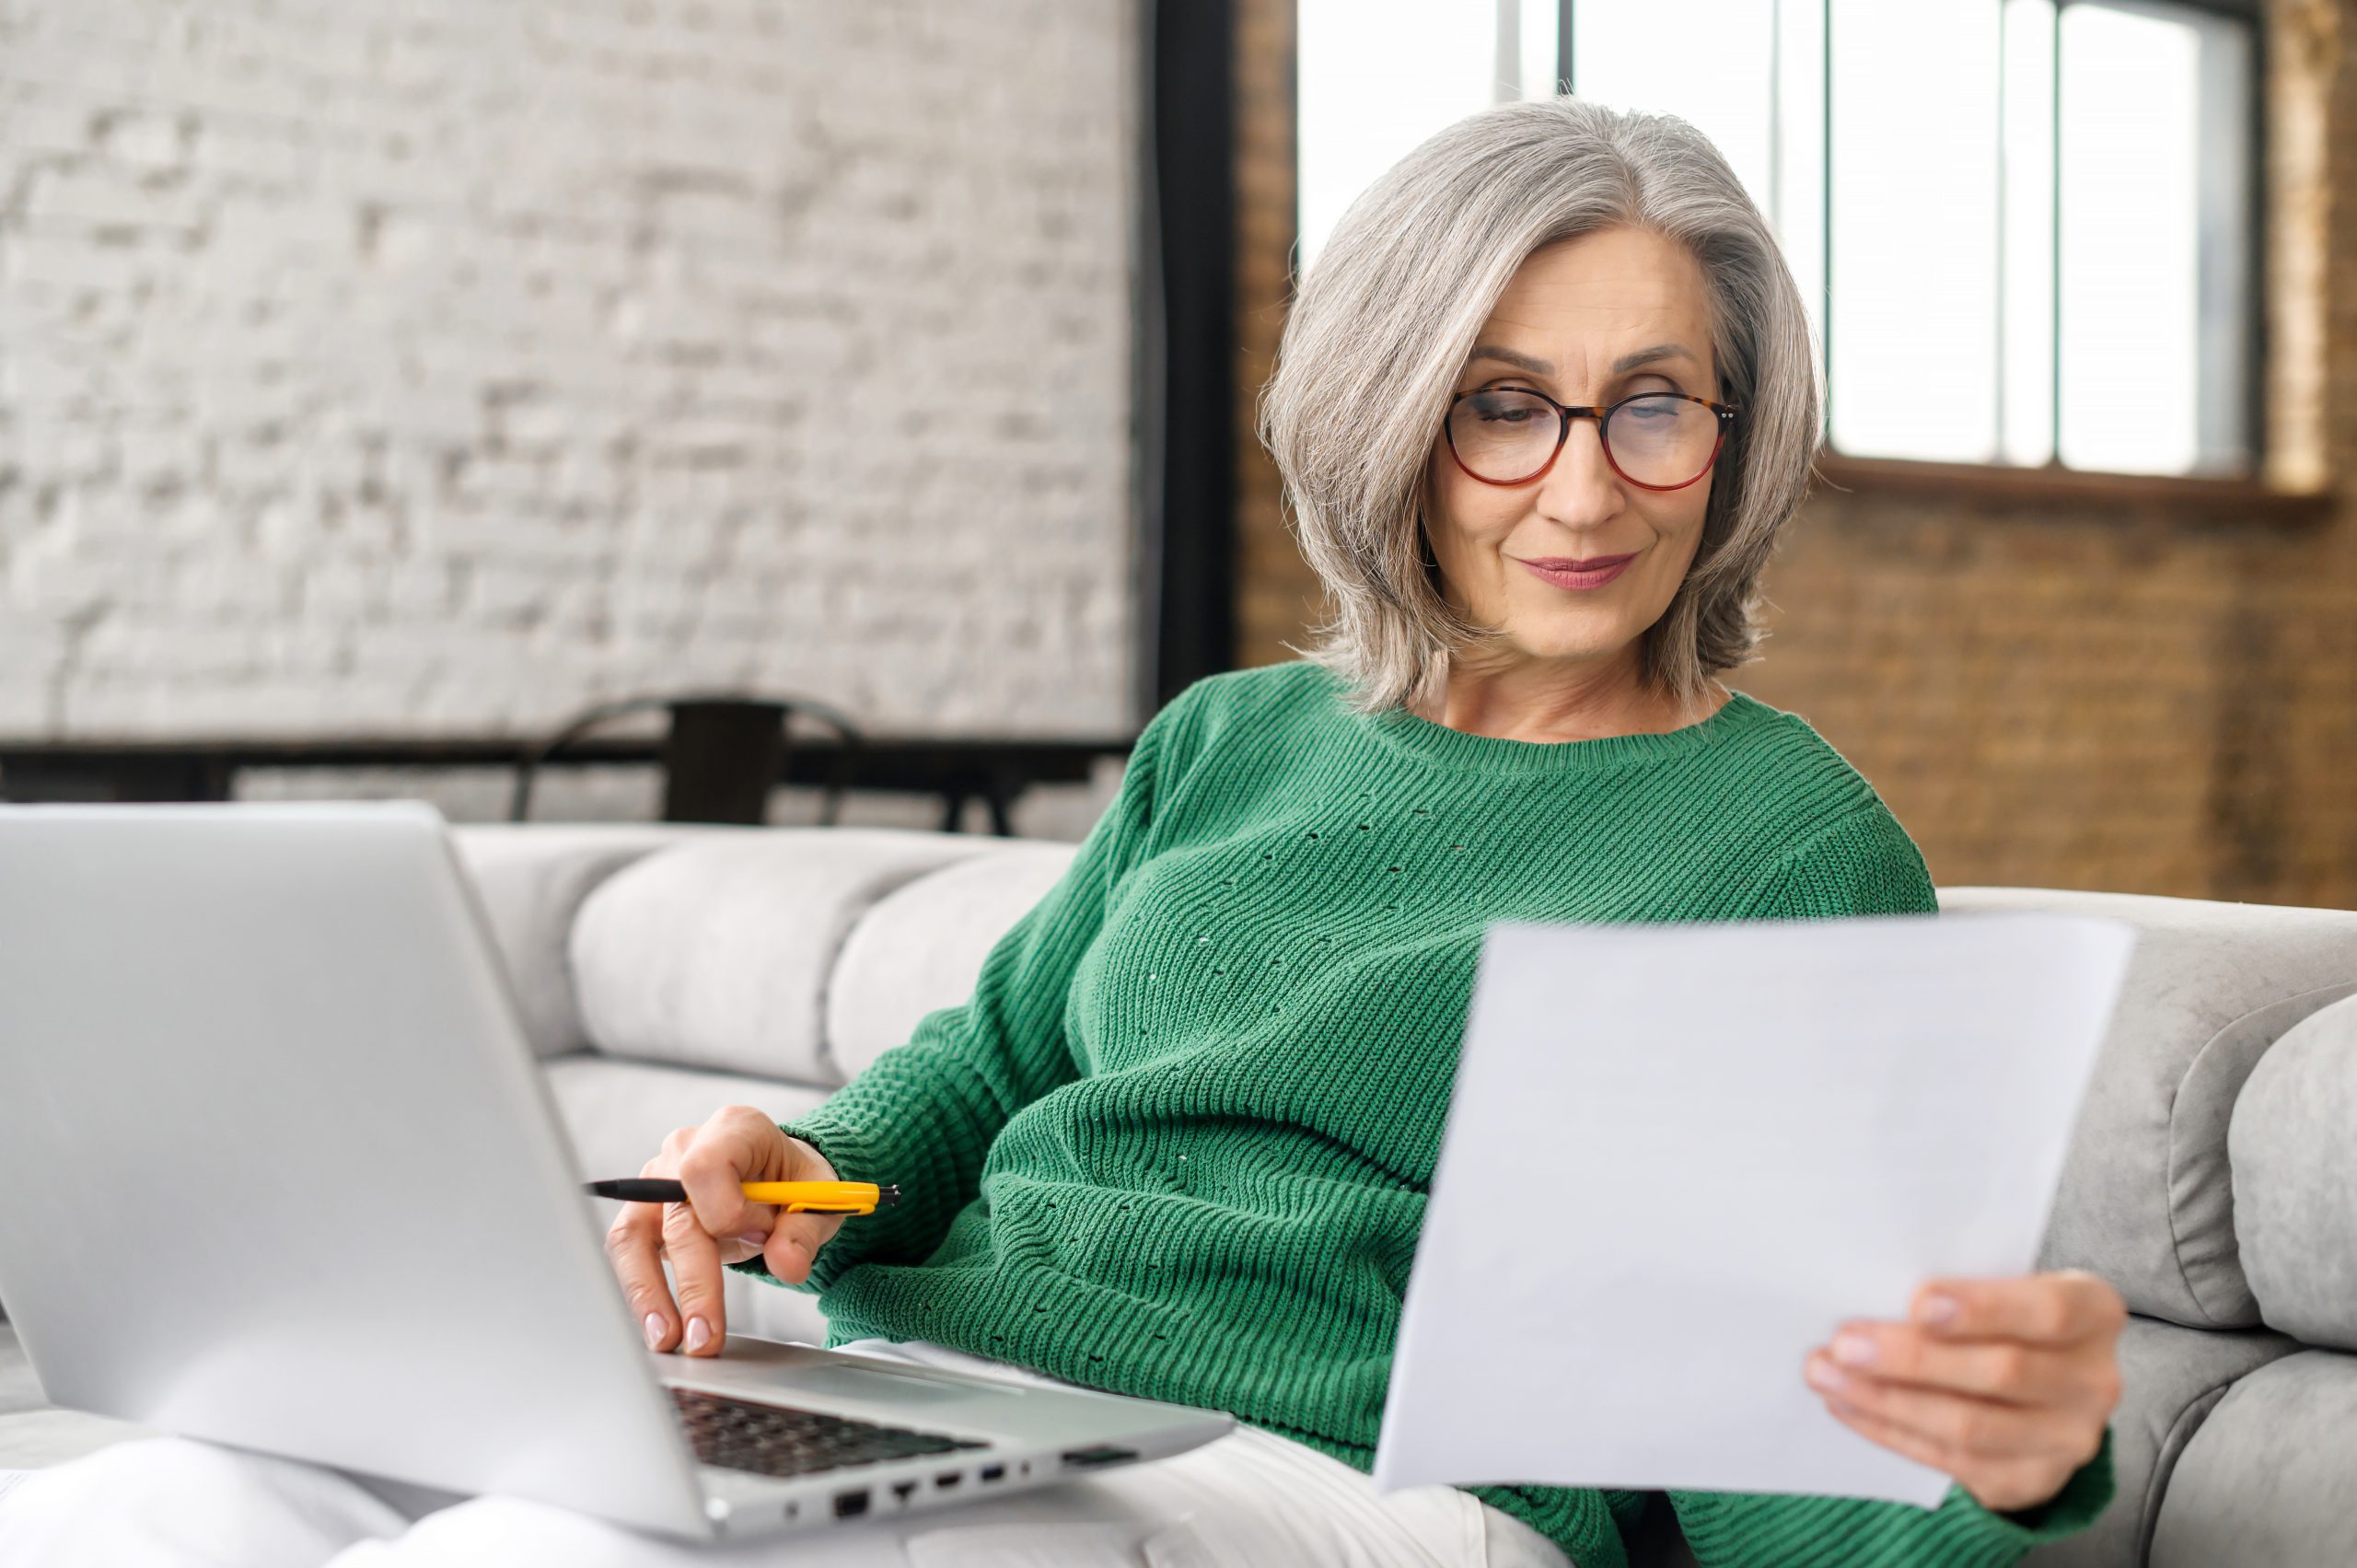 Mature senior woman using a laptop at home